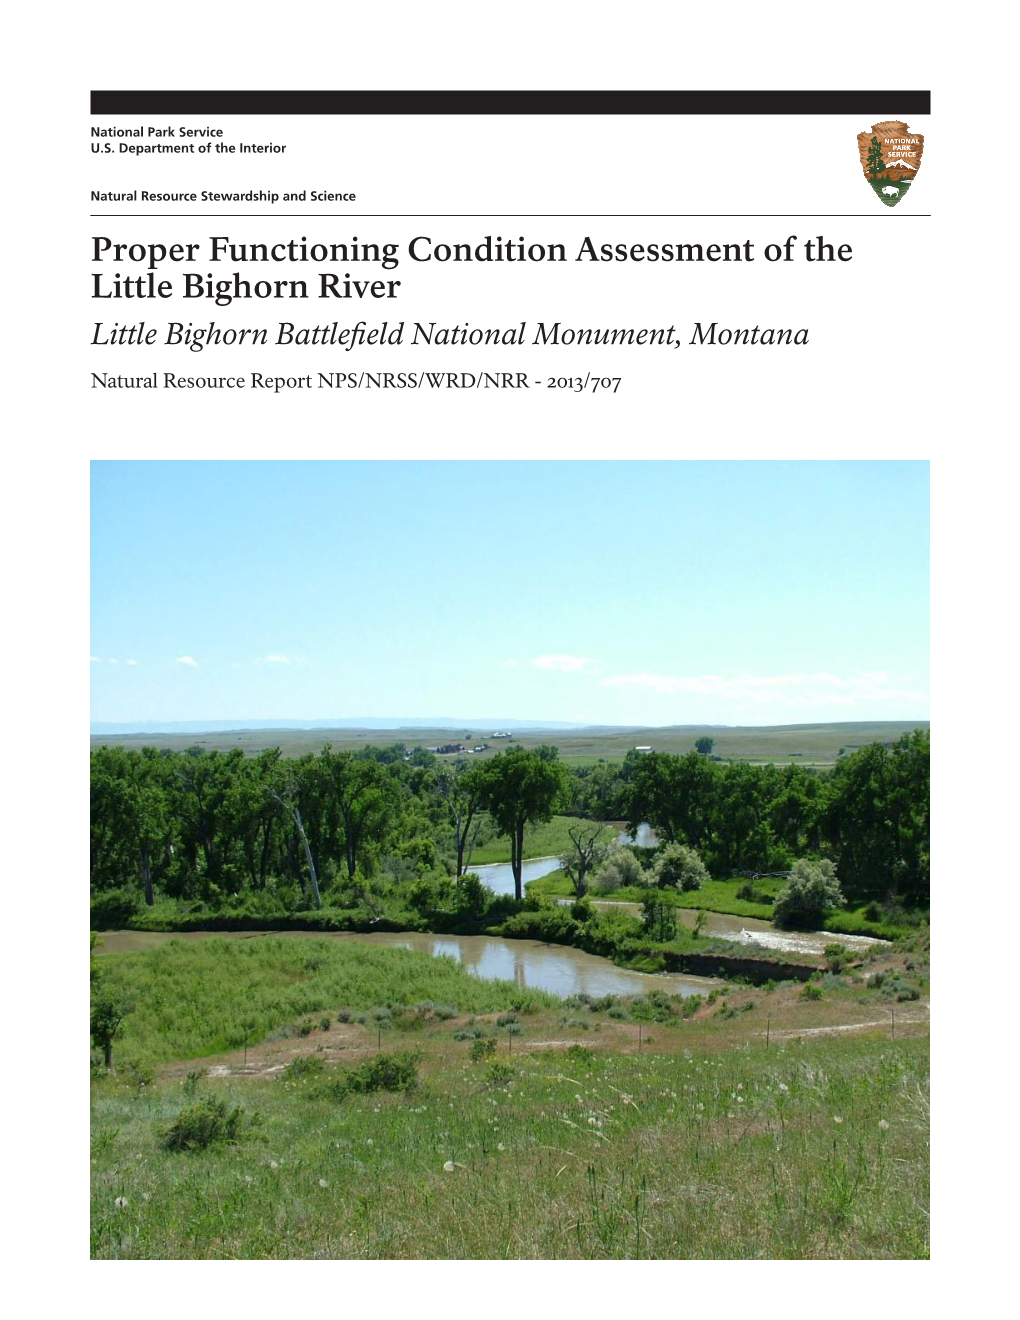 Proper Functioning Condition Assessment of the Little Bighorn River Little Bighorn Battlefield National Monument, Montana